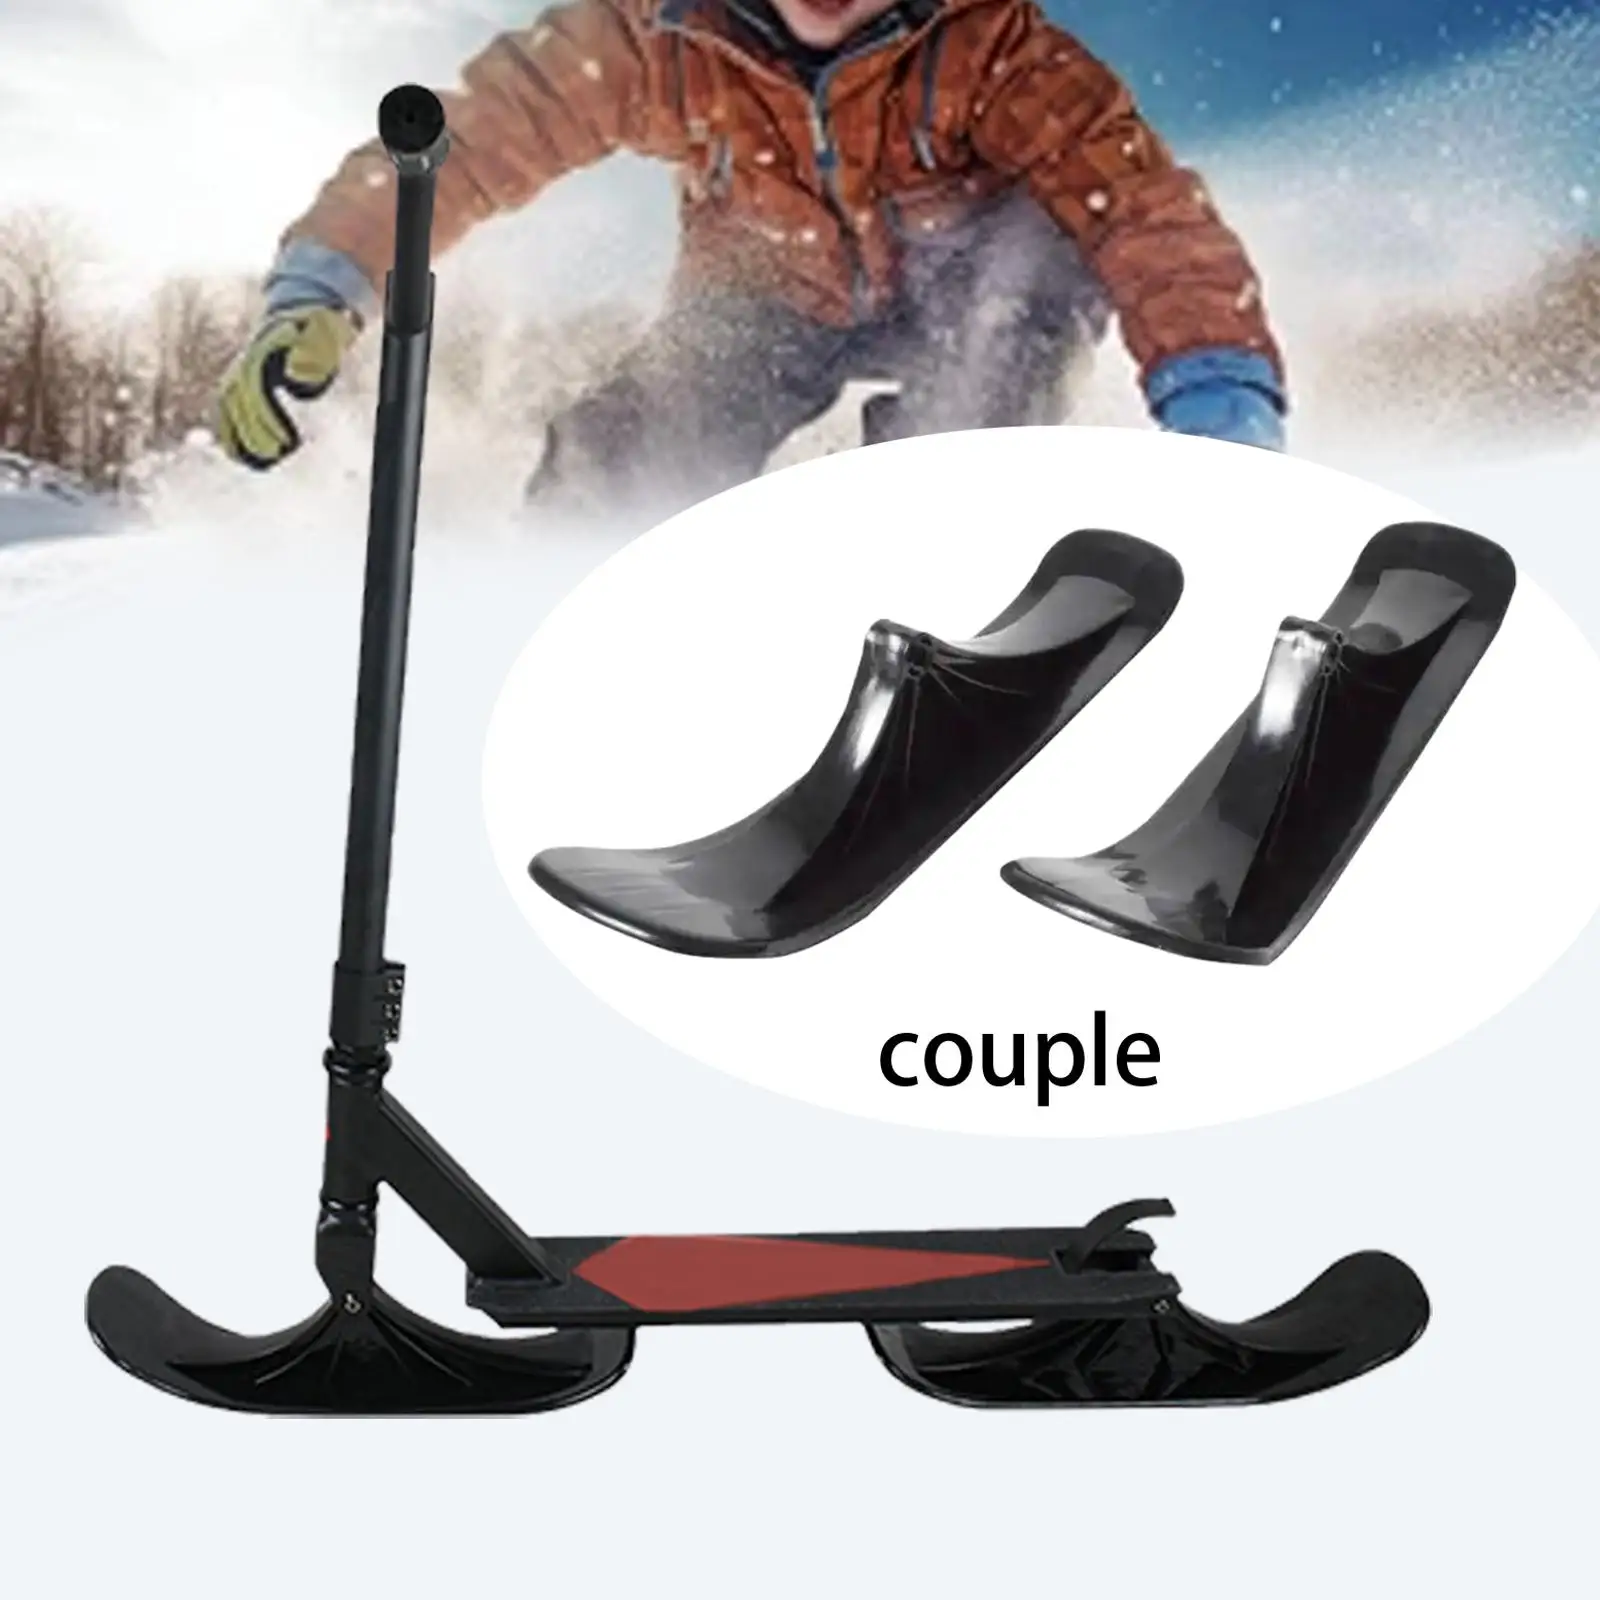 2x Snow Sledge Board Bike Snowboard Scooter Sledge Portable Winter Snow Sled Ski Attachment Bicycle Sled Toboggan Skiing Board